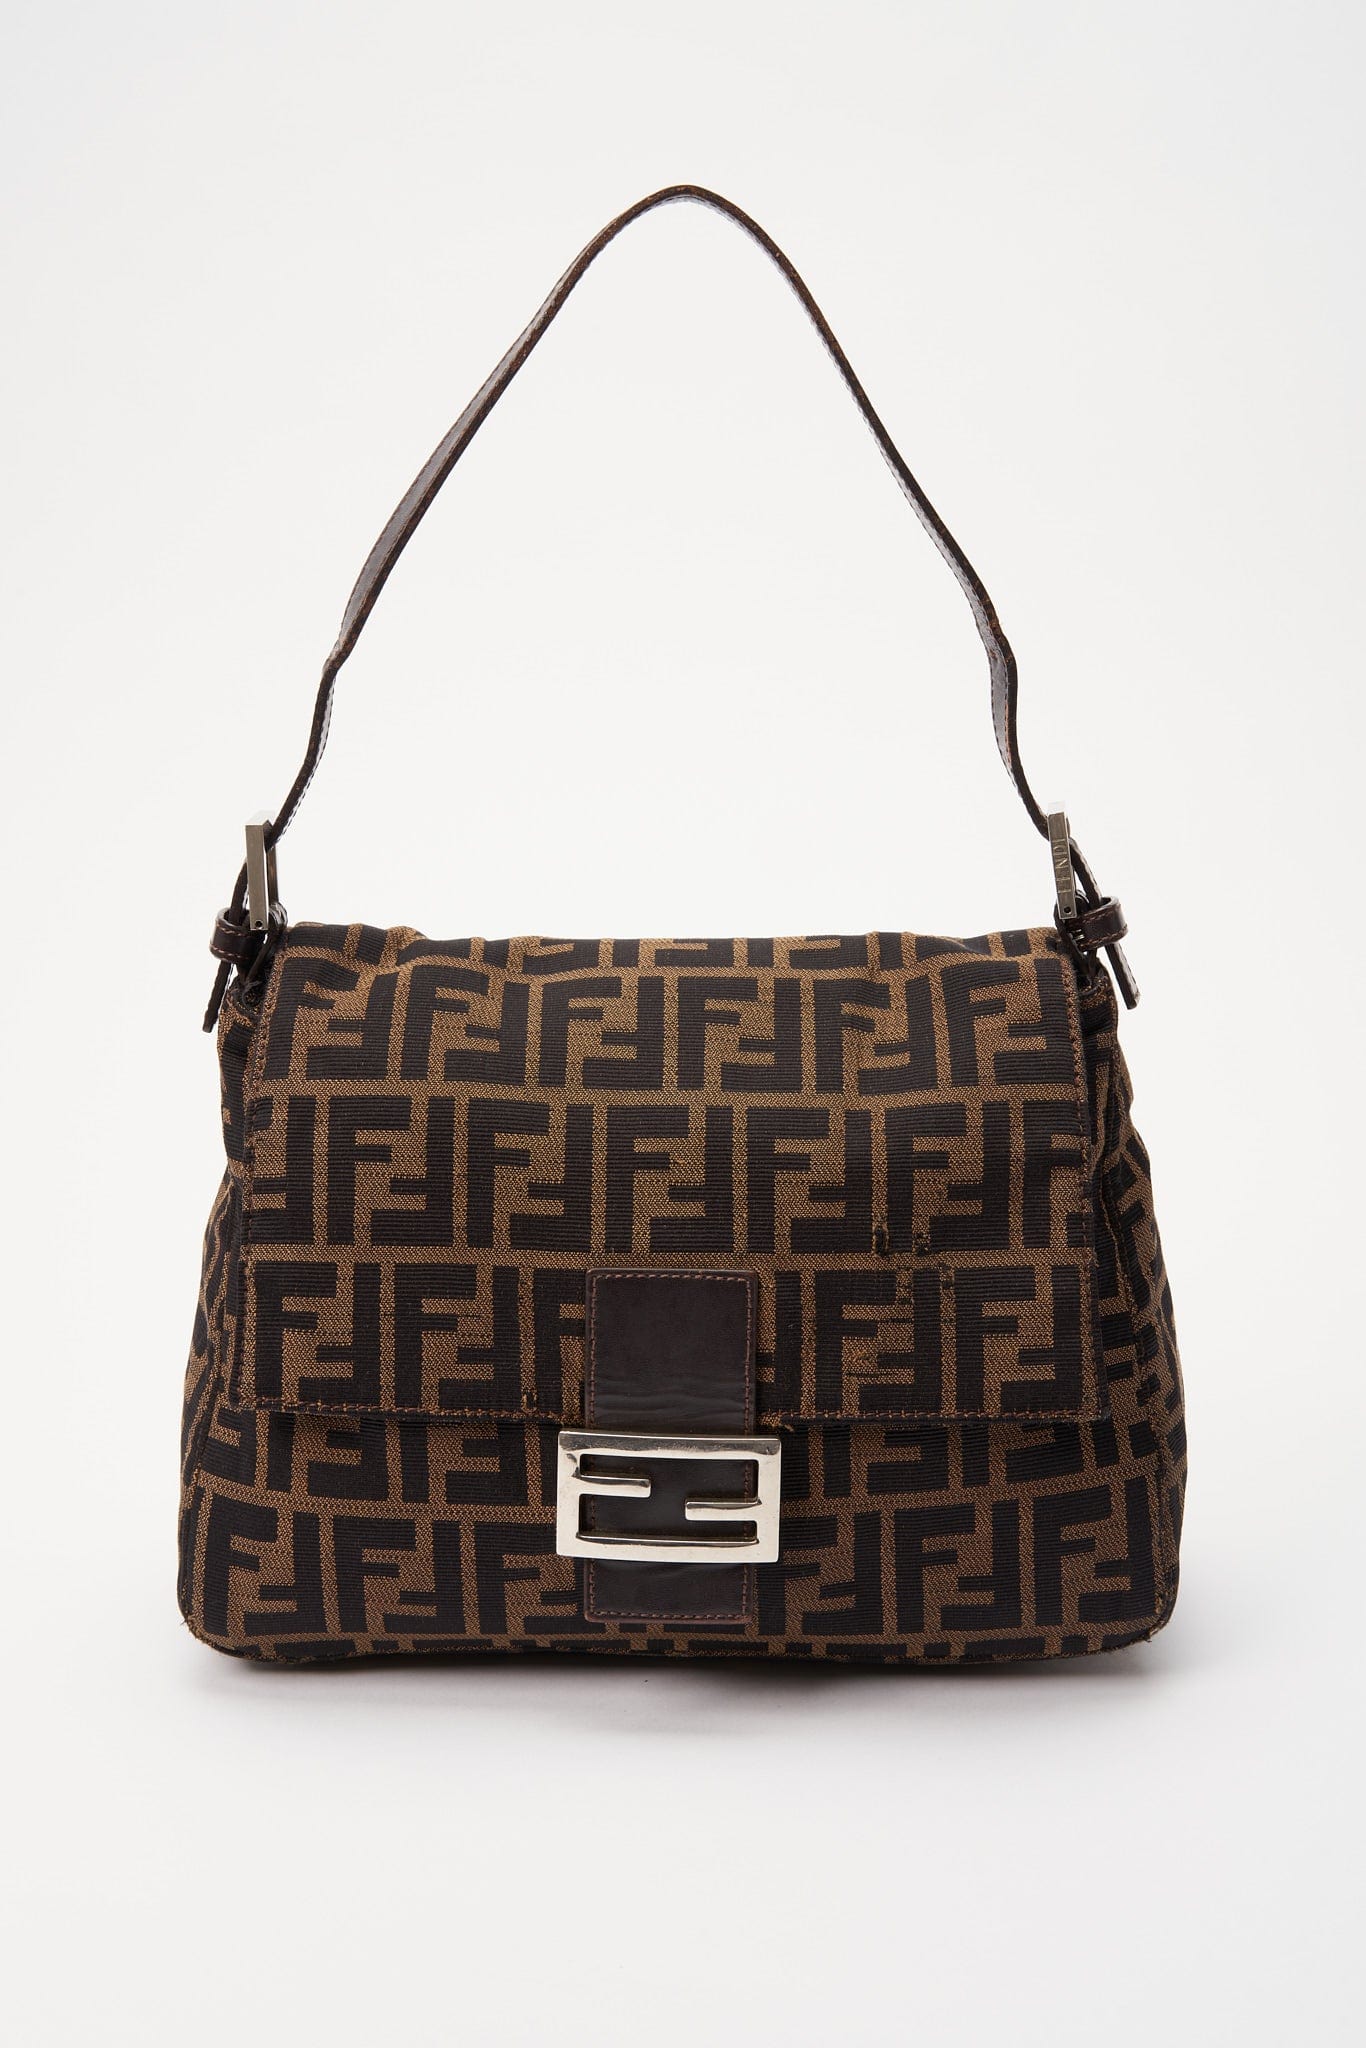 Fendi Baguette Bags & Handbags for Women, Authenticity Guaranteed